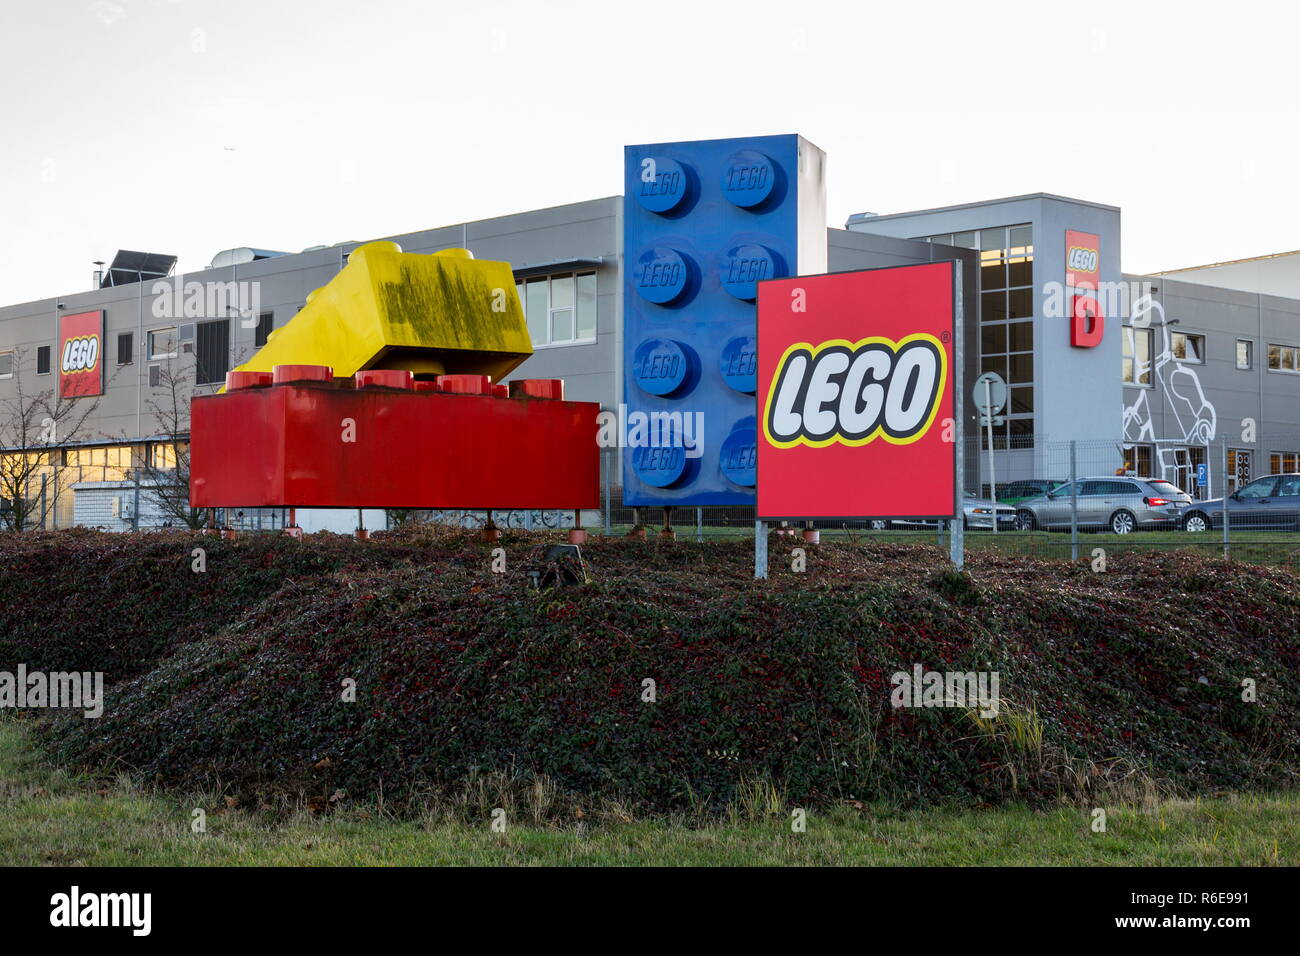 KLADNO, CZECH REPUBLIC - DECEMBER 4 2018: Giant Lego bricks in front of the Lego Group company logo production plant on December 4, 2018 in Kladno, Cz Photo - Alamy